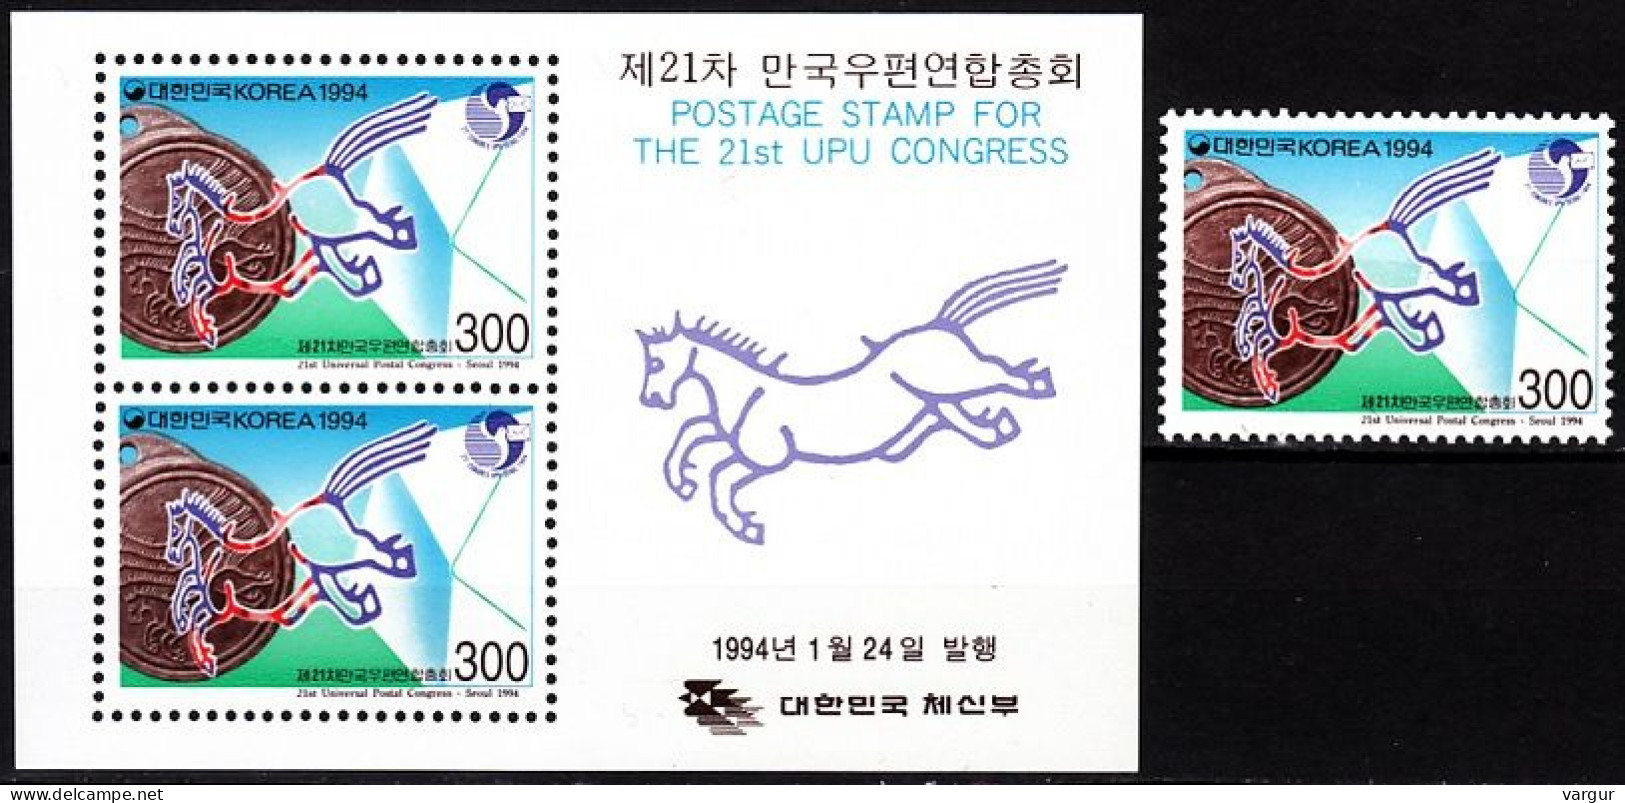 KOREA SOUTH 1994 Post: UPU Congress. 3rd Issue. Postal Horse Seal, MNH - UPU (Wereldpostunie)